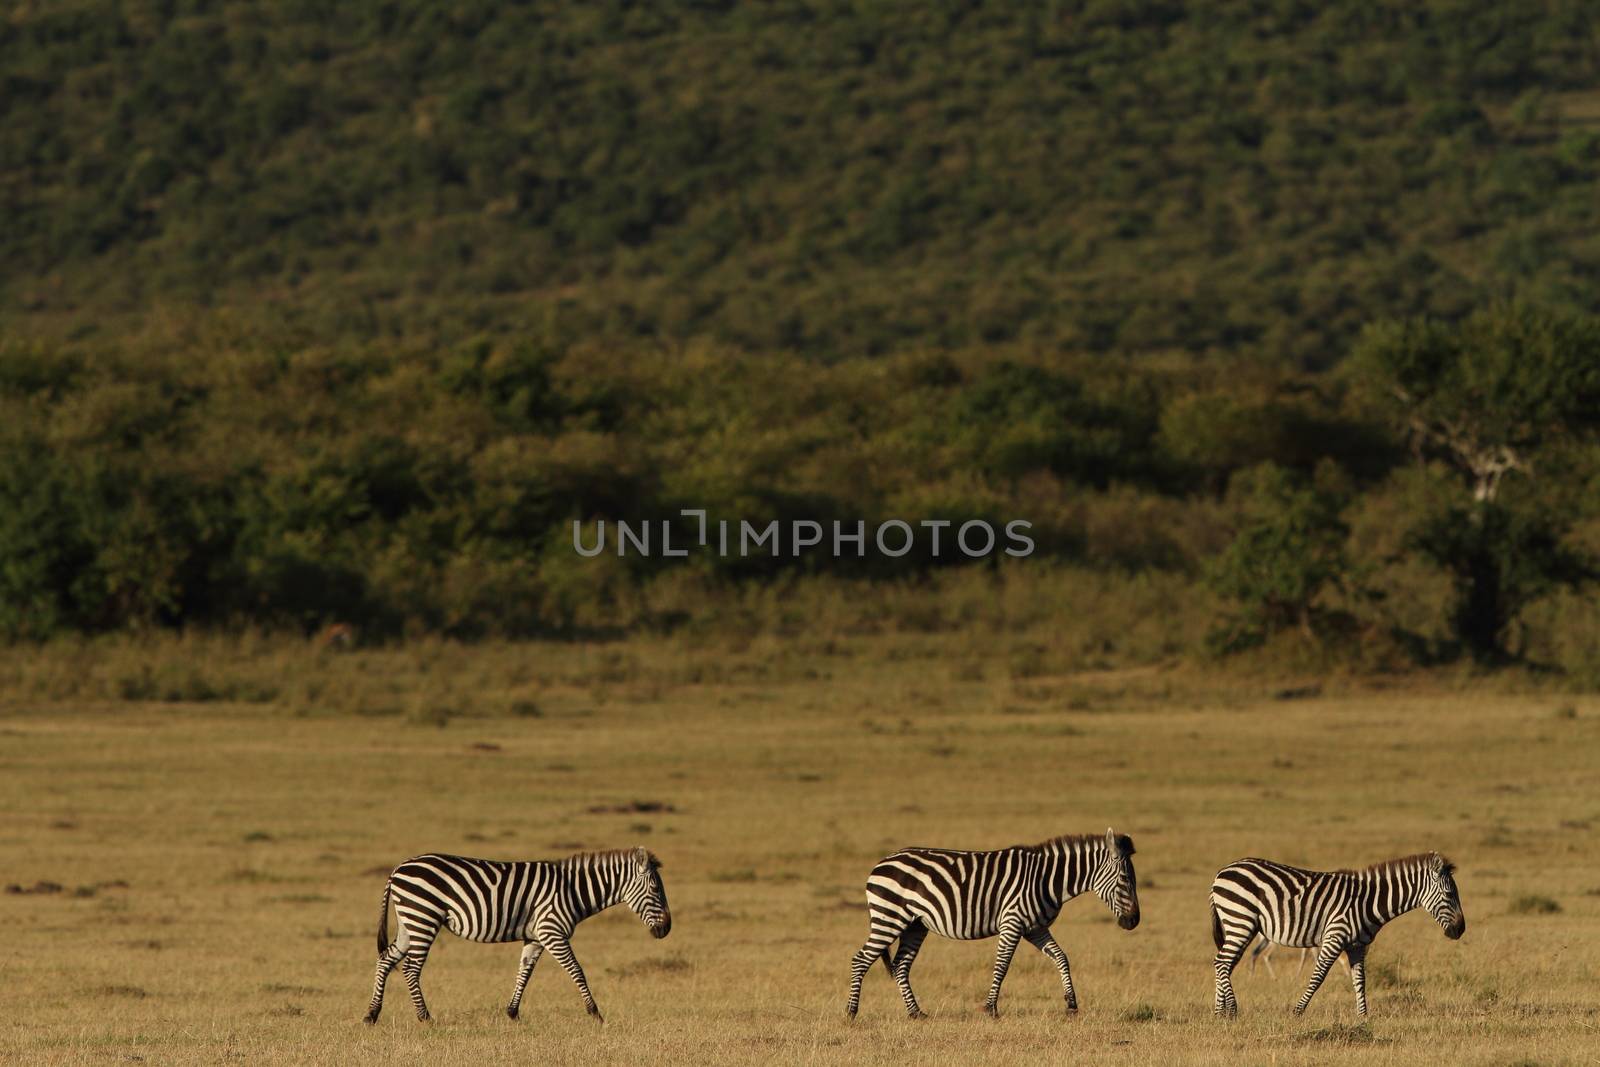 Zebra in the wilderness by ozkanzozmen